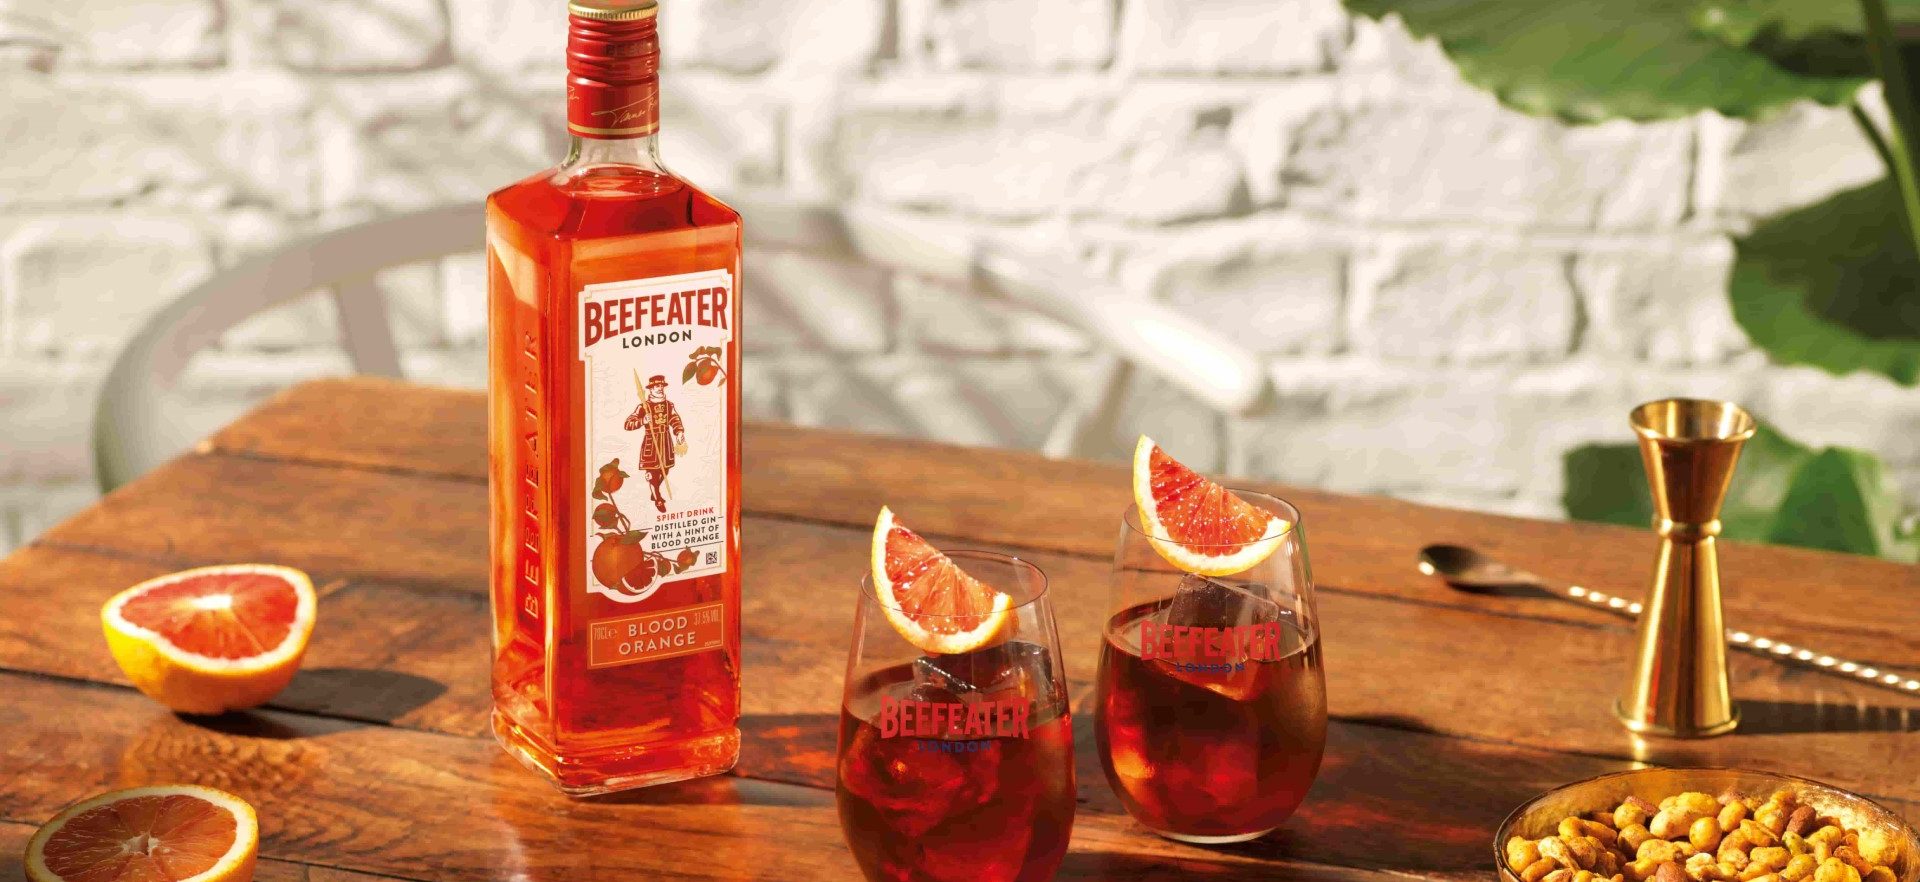 beefeater blood orange sunset negroni cocktail 1 aspect ratio 1647 756